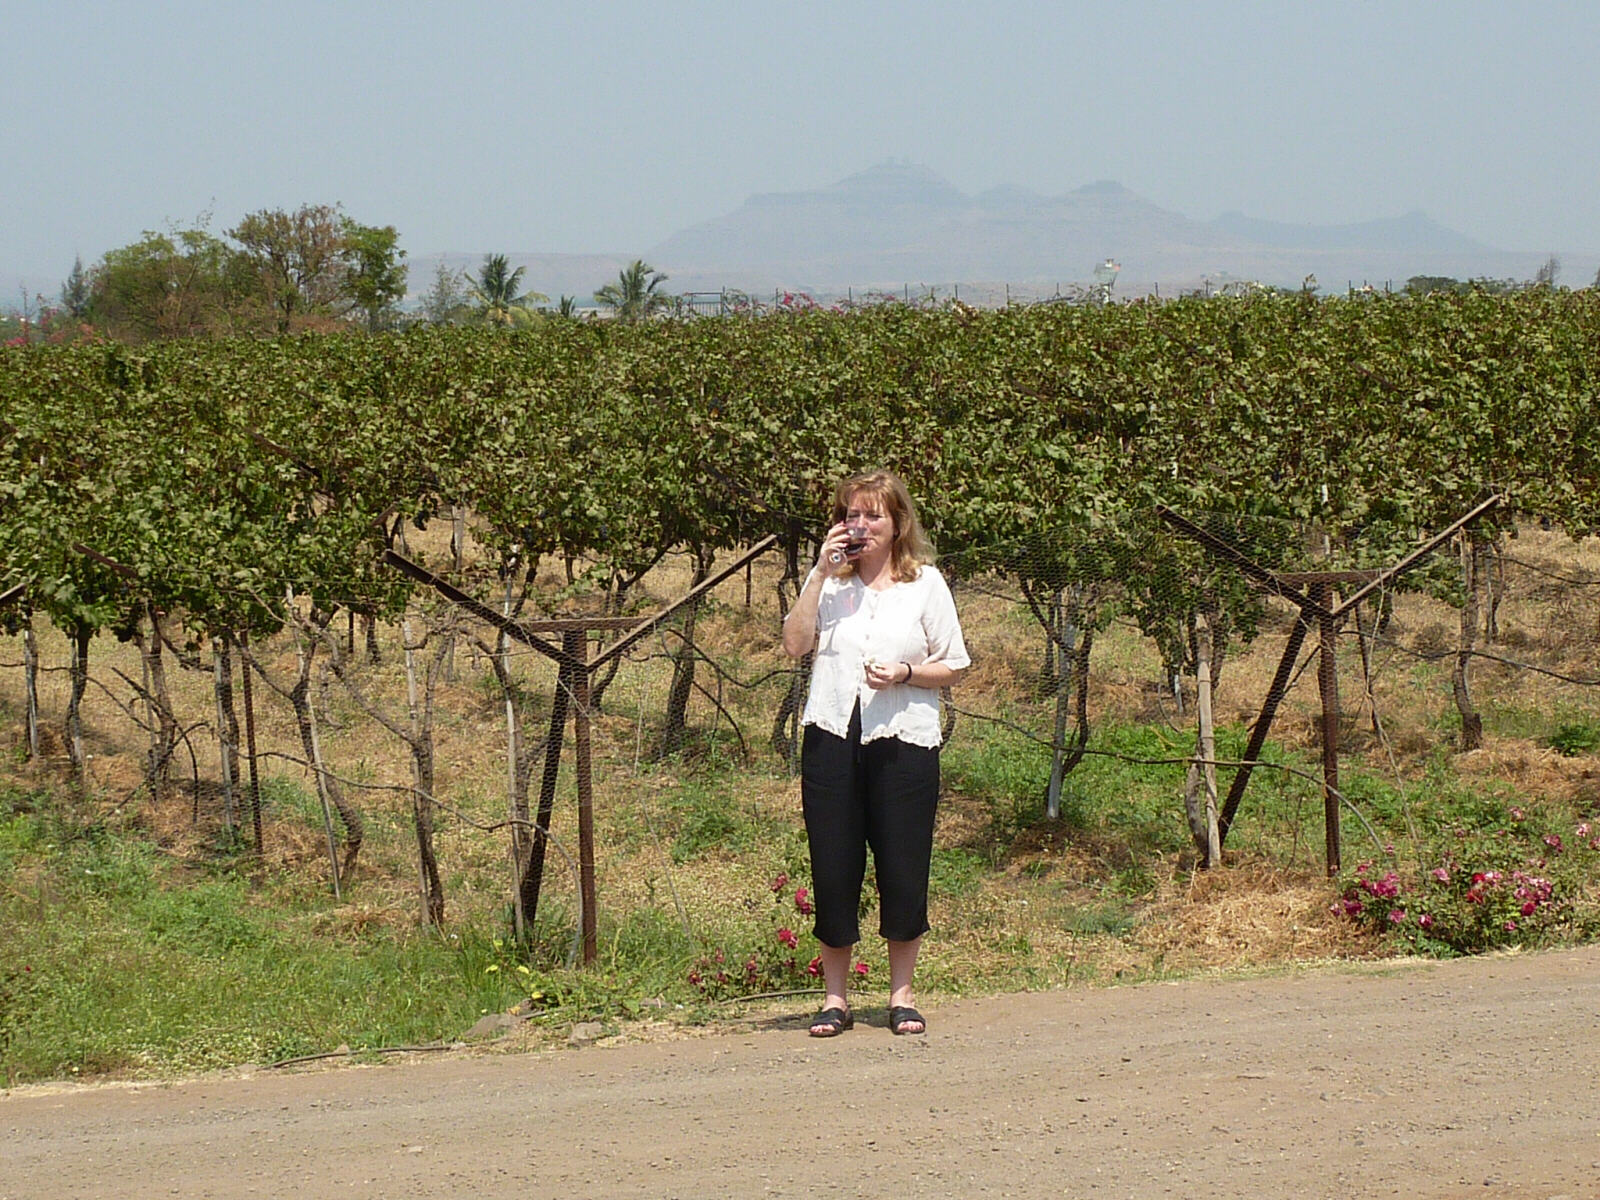 In Sula vineyard near Nasik, India